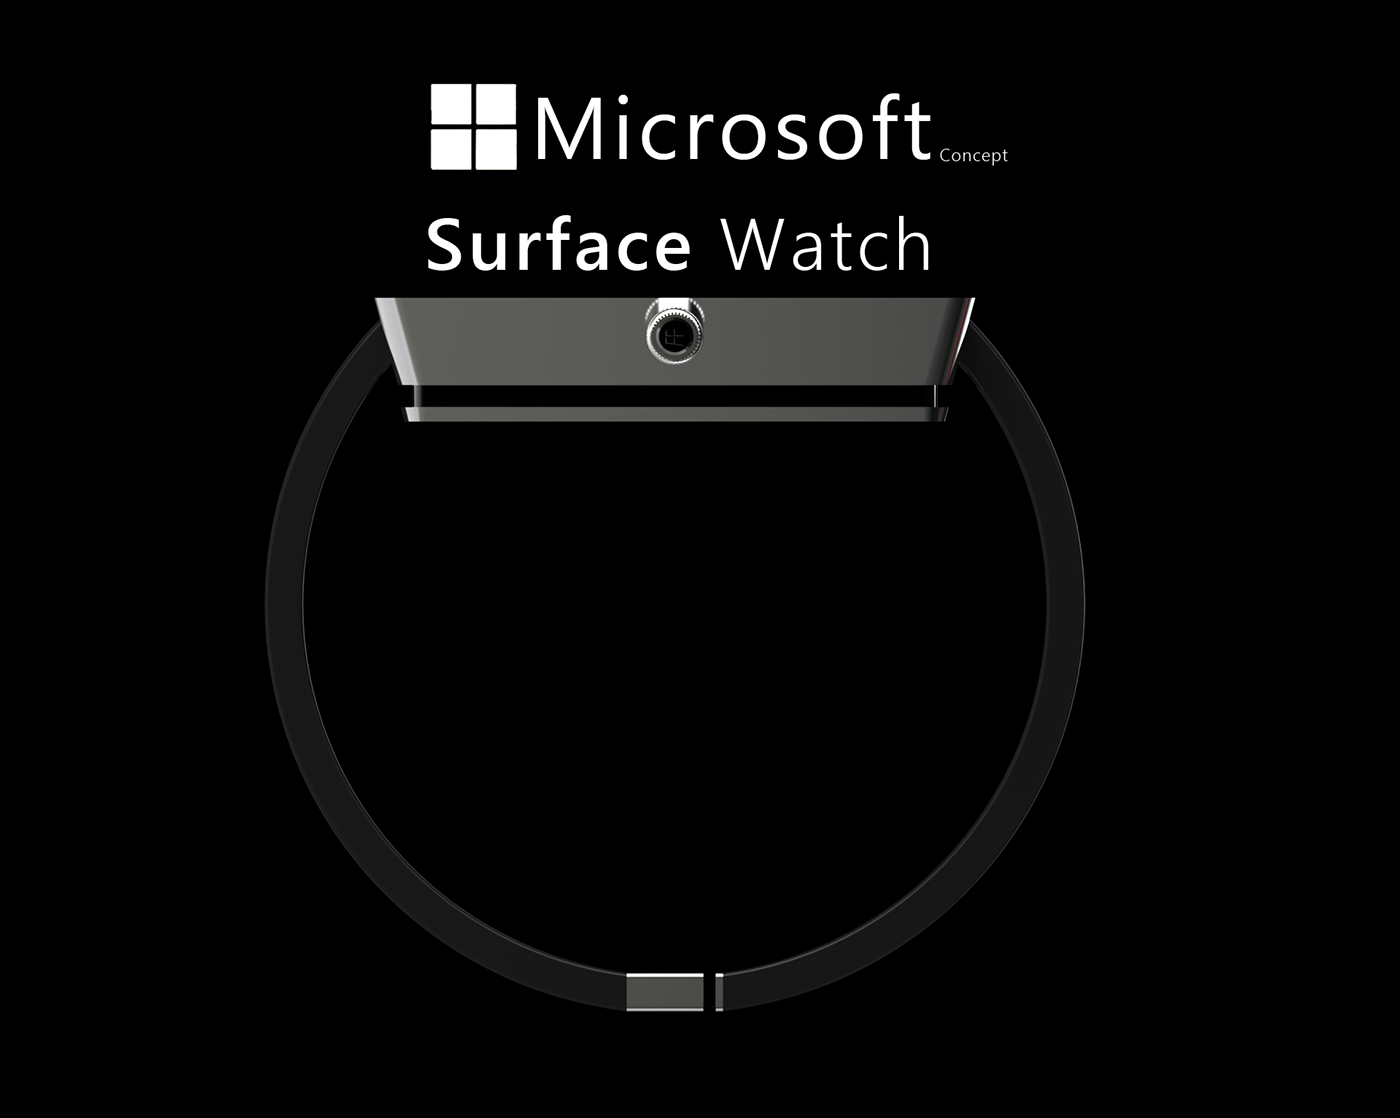 Microsoft surface watch smartwatch concept